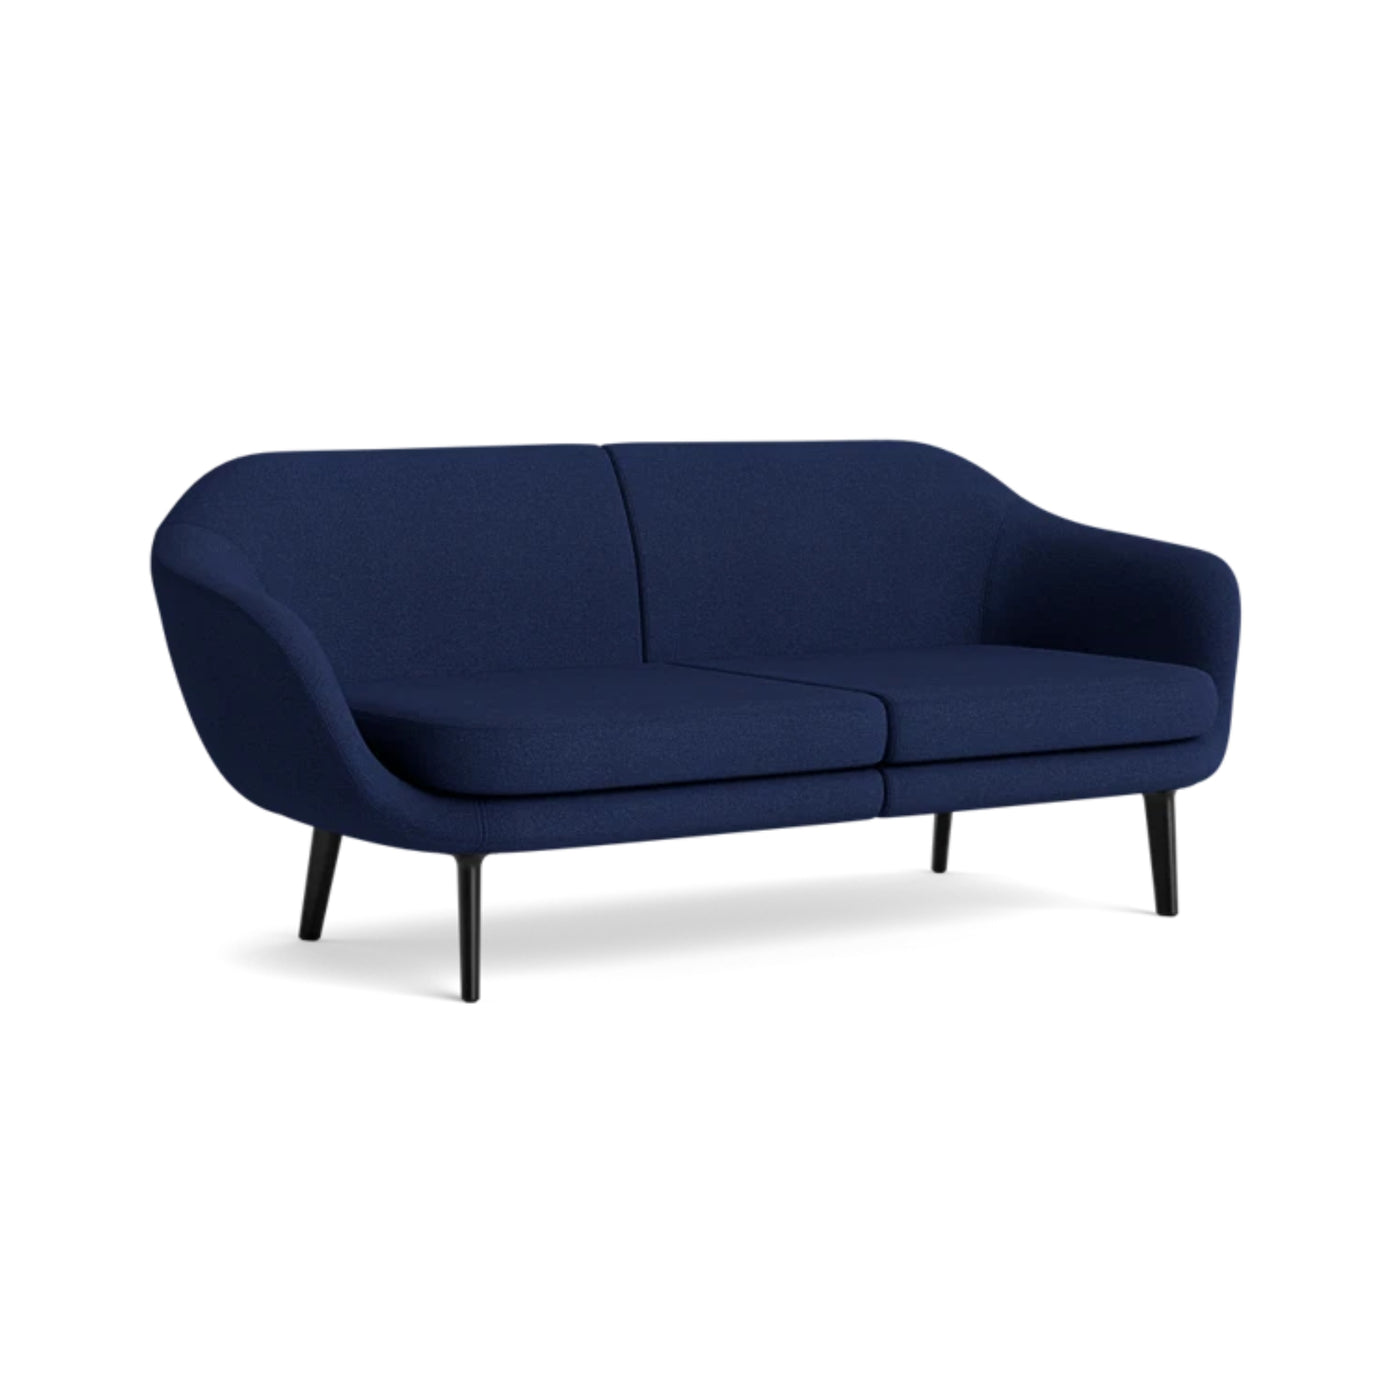 Normann Copenhagen Sum Modular 2 Seater Sofa. Made to order from someday designs. #colour_hallingdal-764